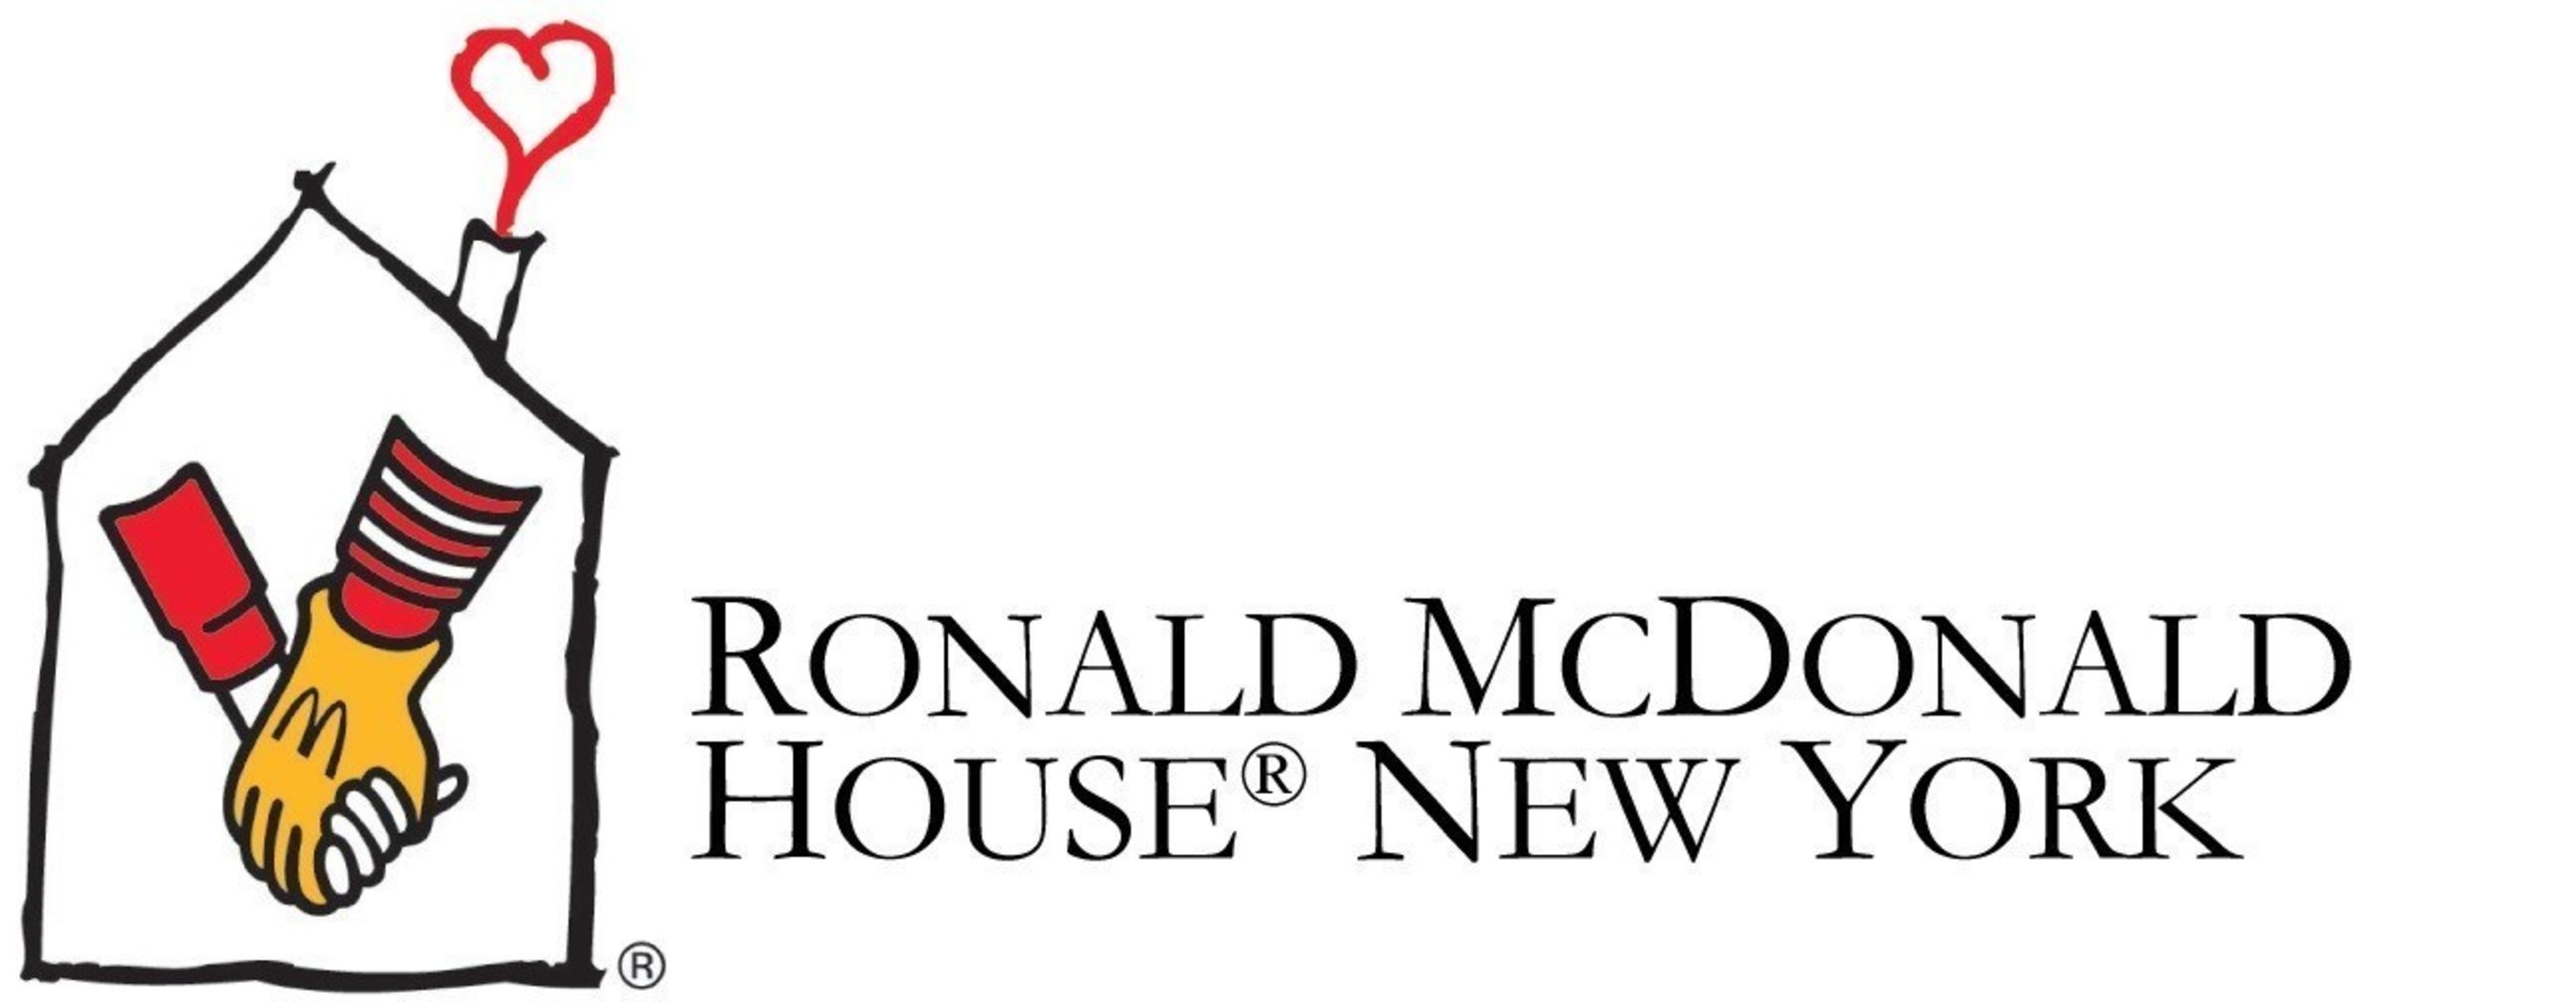 Ronald McDonald House - New York